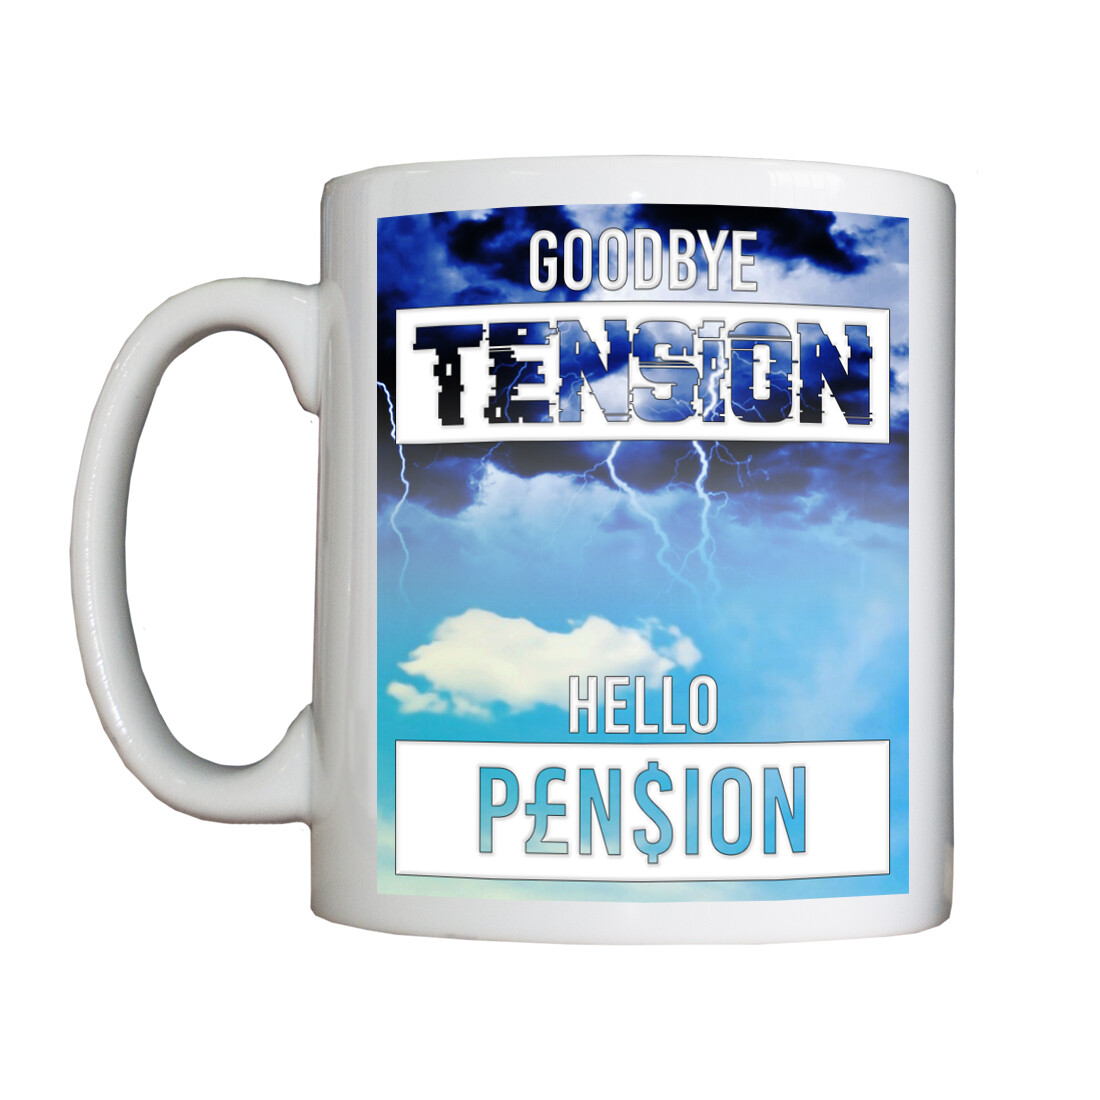 New Personalised 'Goodbye Tension Hello Pension' Mug